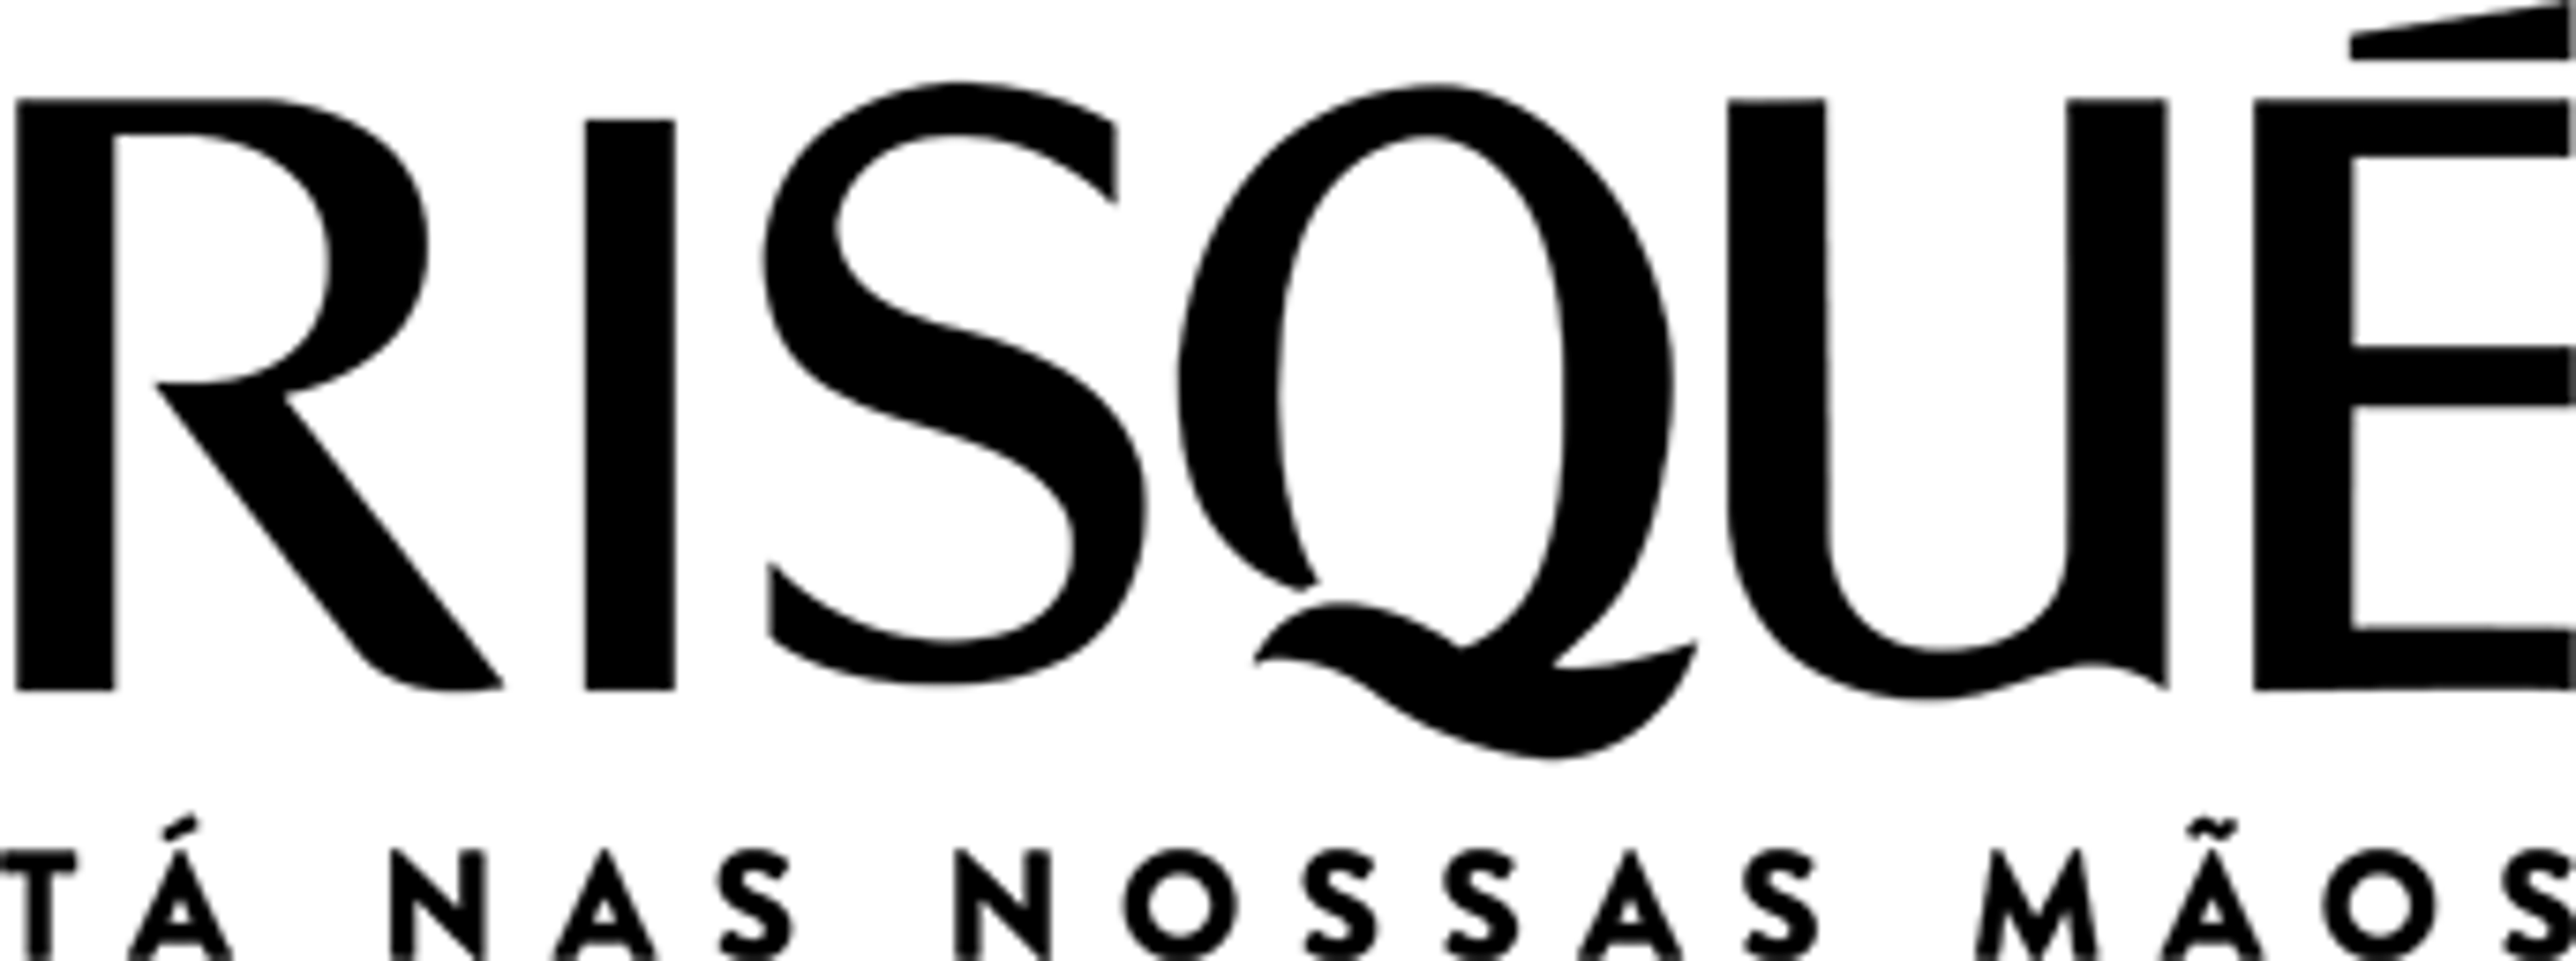 Risque_Logo.png